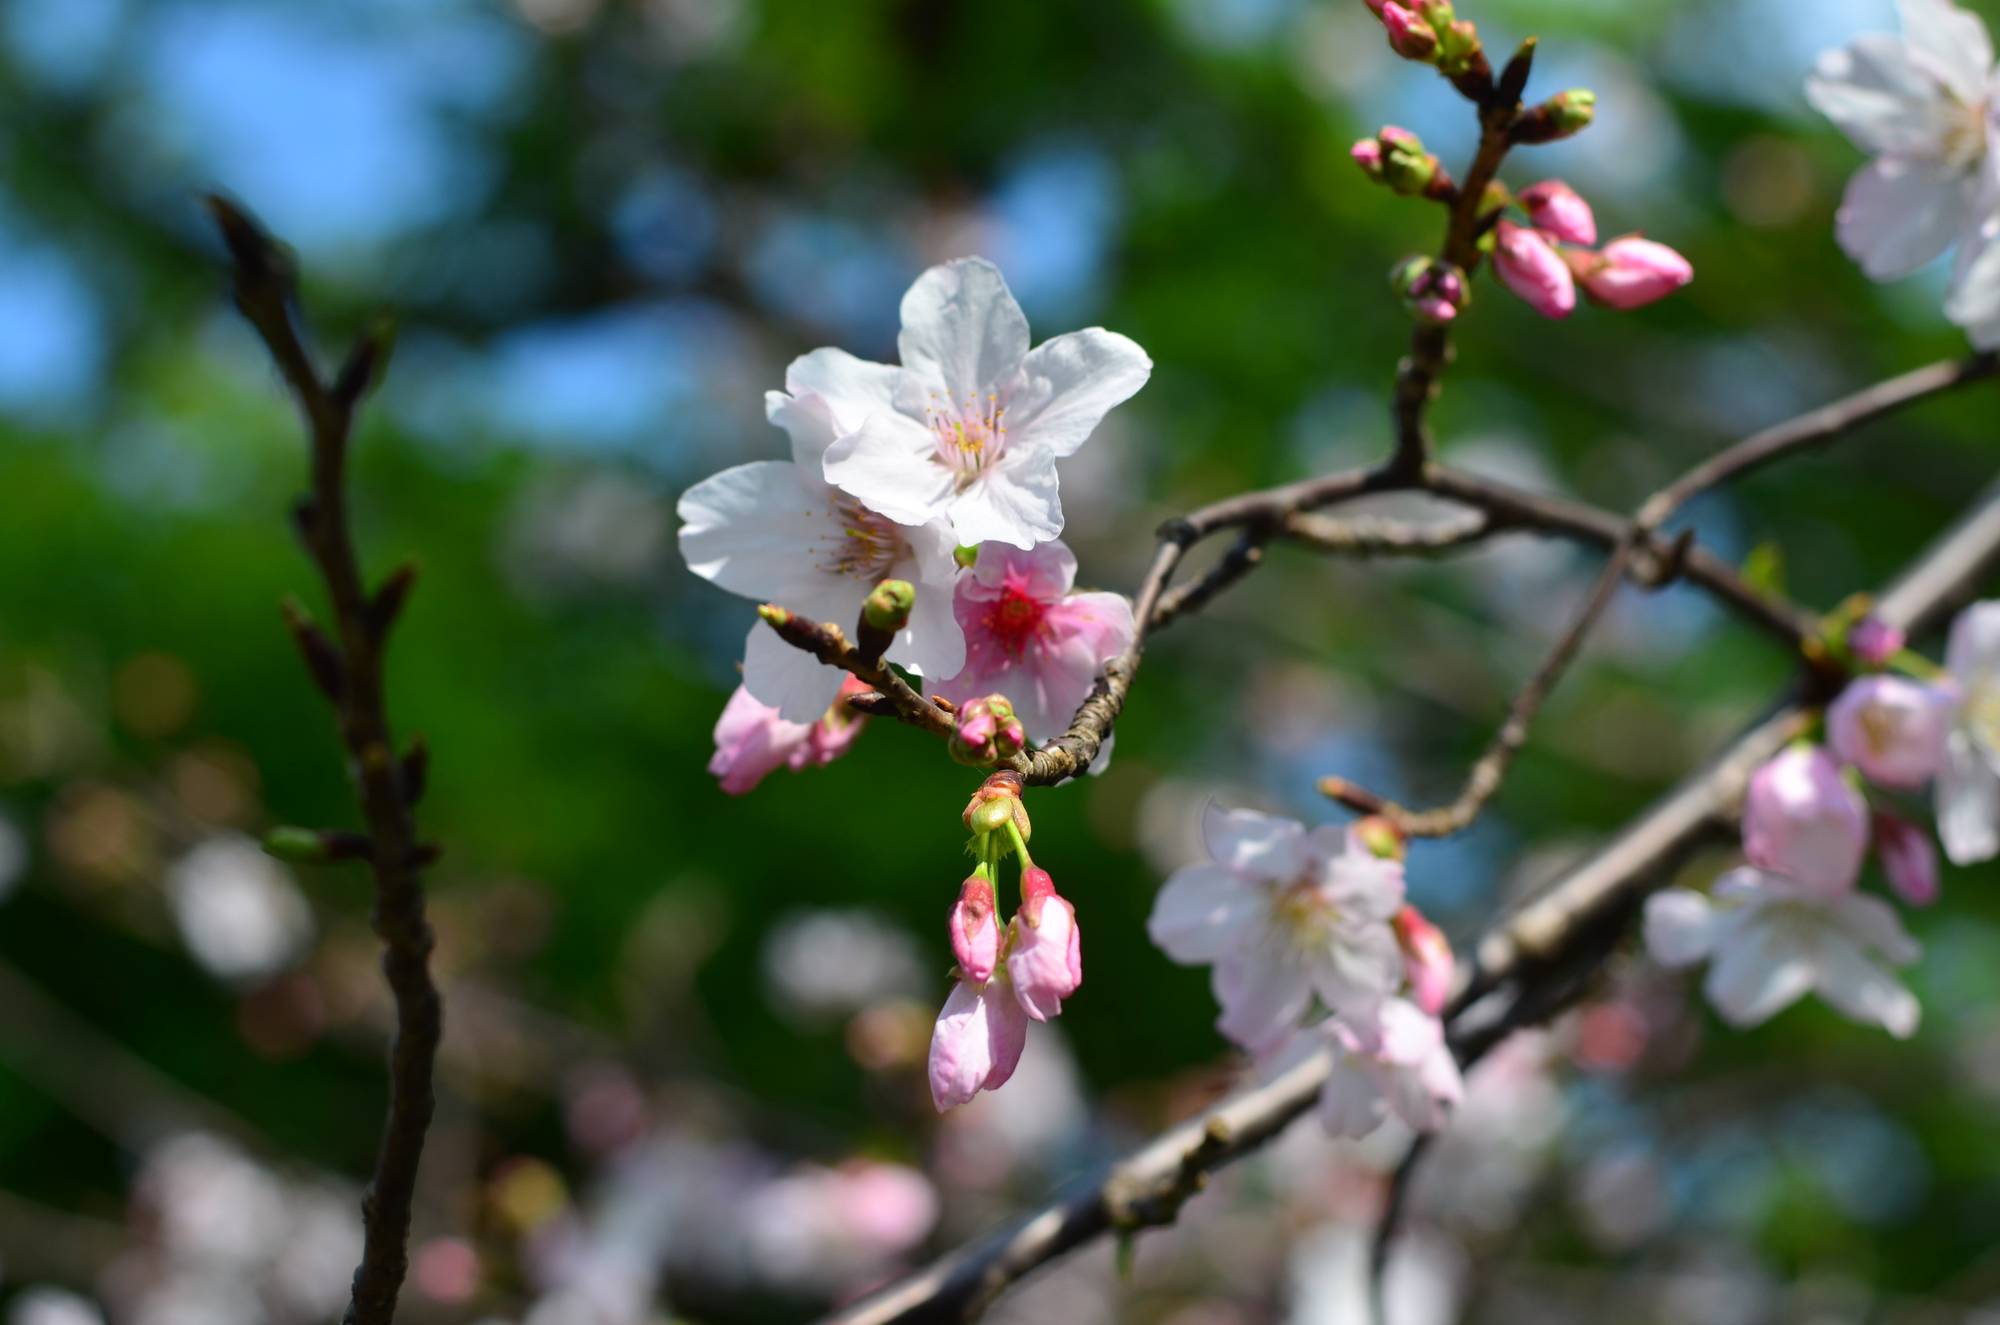 I went near the sakura tree to take photos of the sakura flowers. Damn, I love the bokeh.